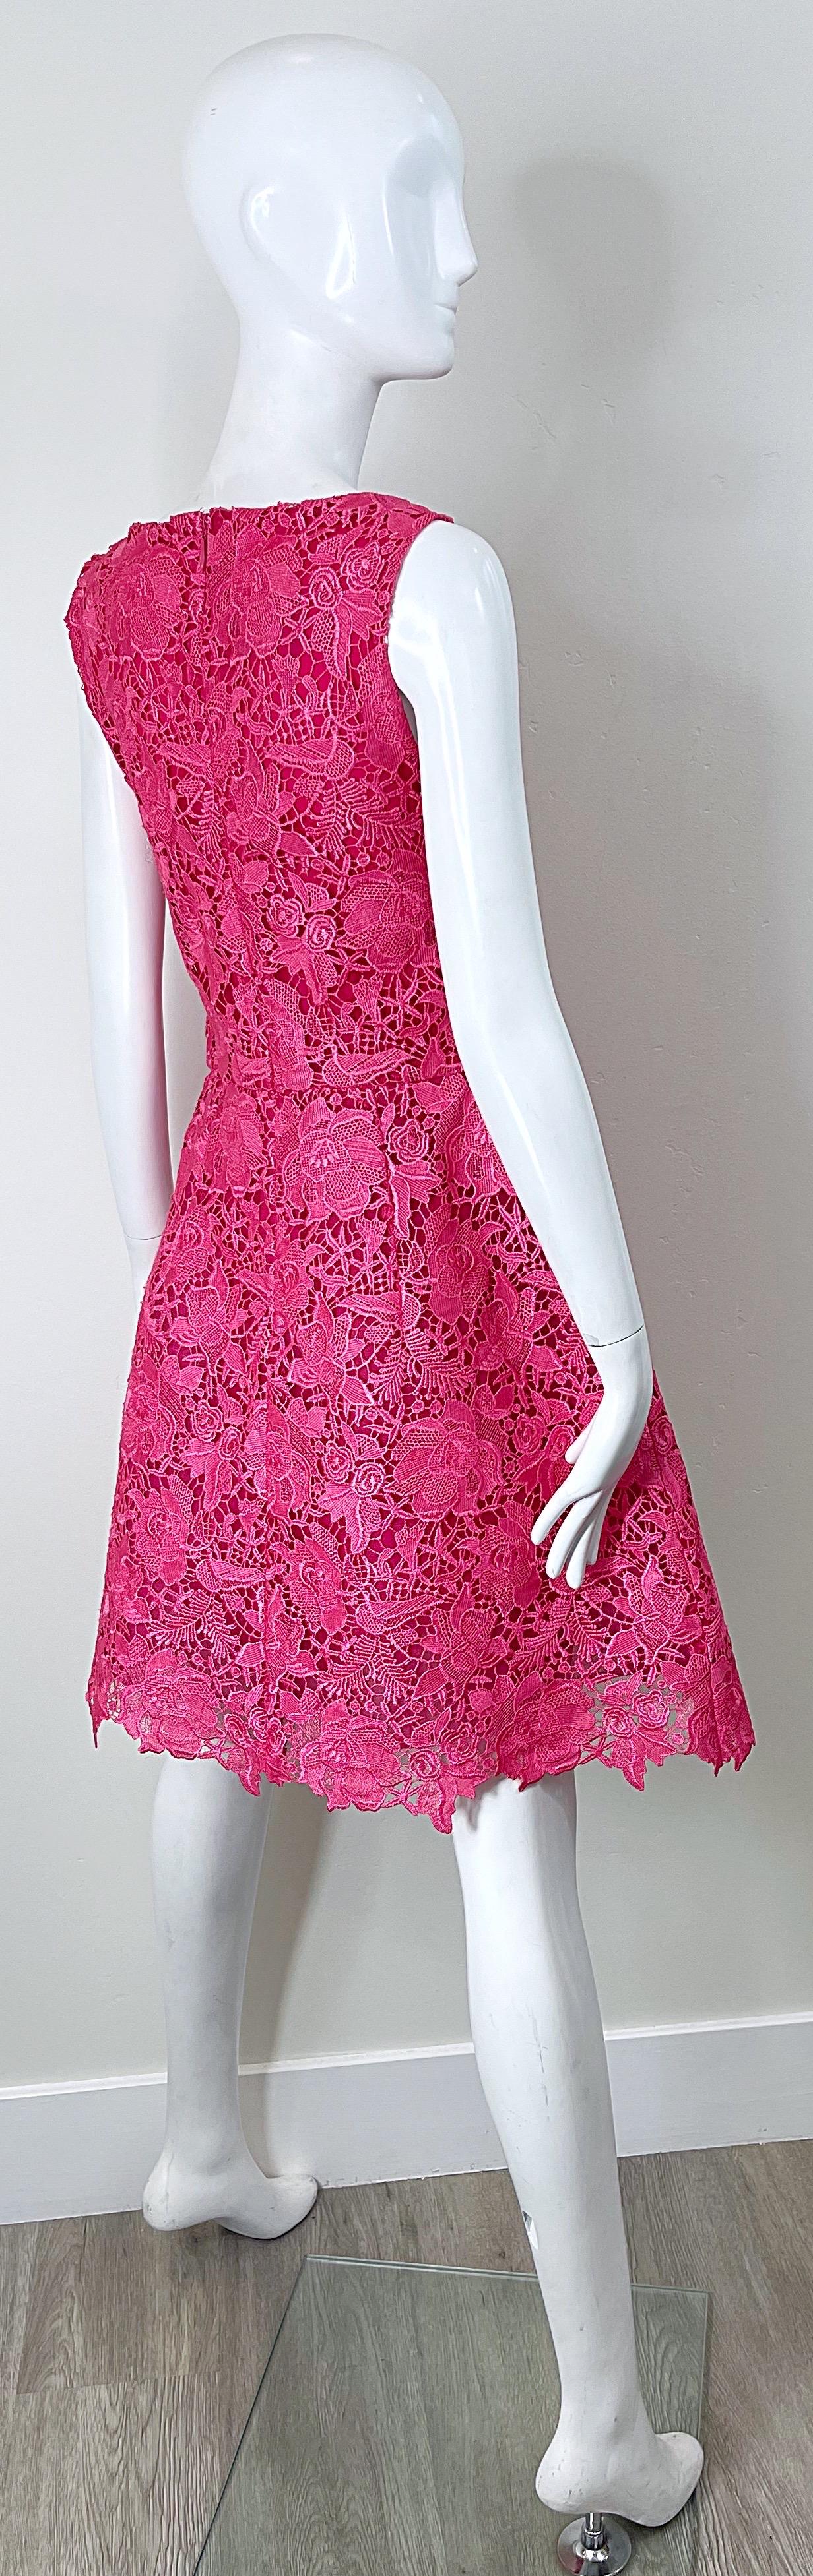 Women's NWT Monique Lhuillier Size 8 / 10 Hot Pink Lace Fit n Flare A Line Dress For Sale